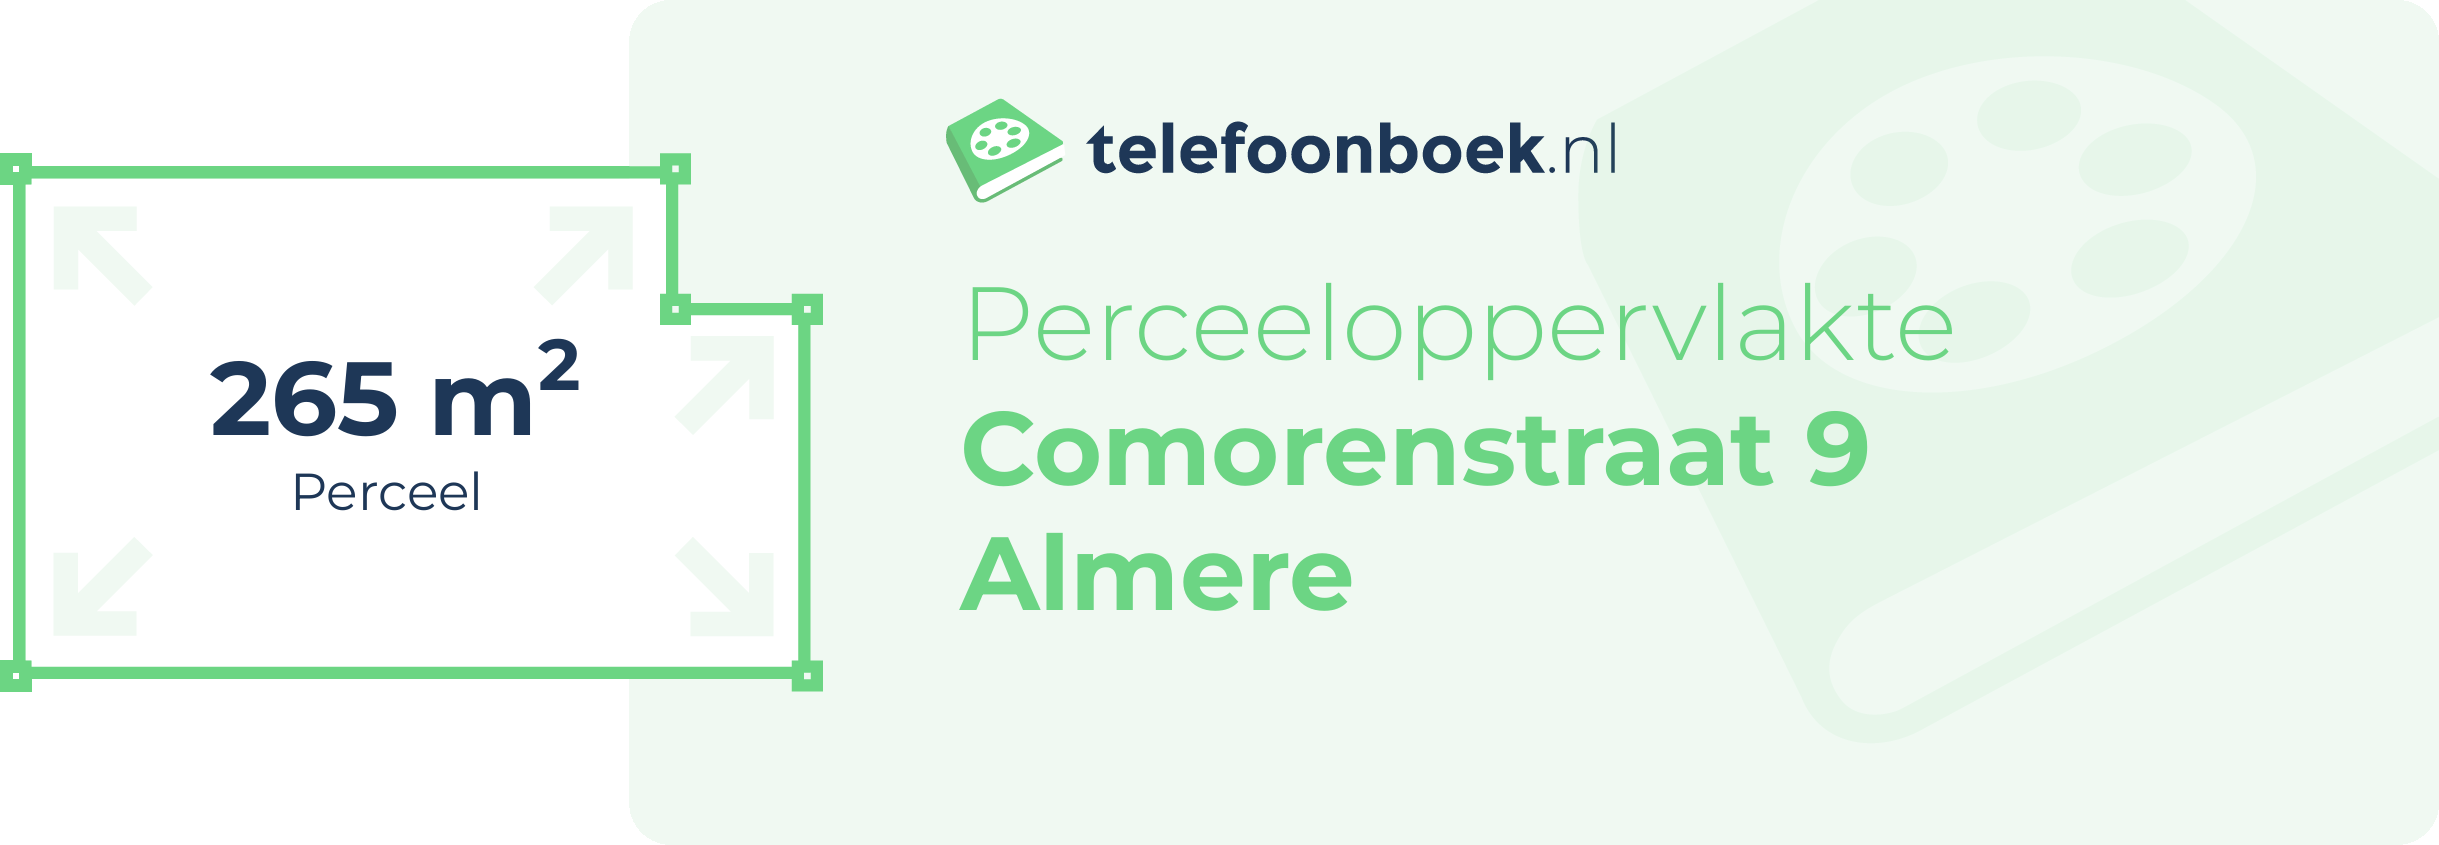 Perceeloppervlakte Comorenstraat 9 Almere